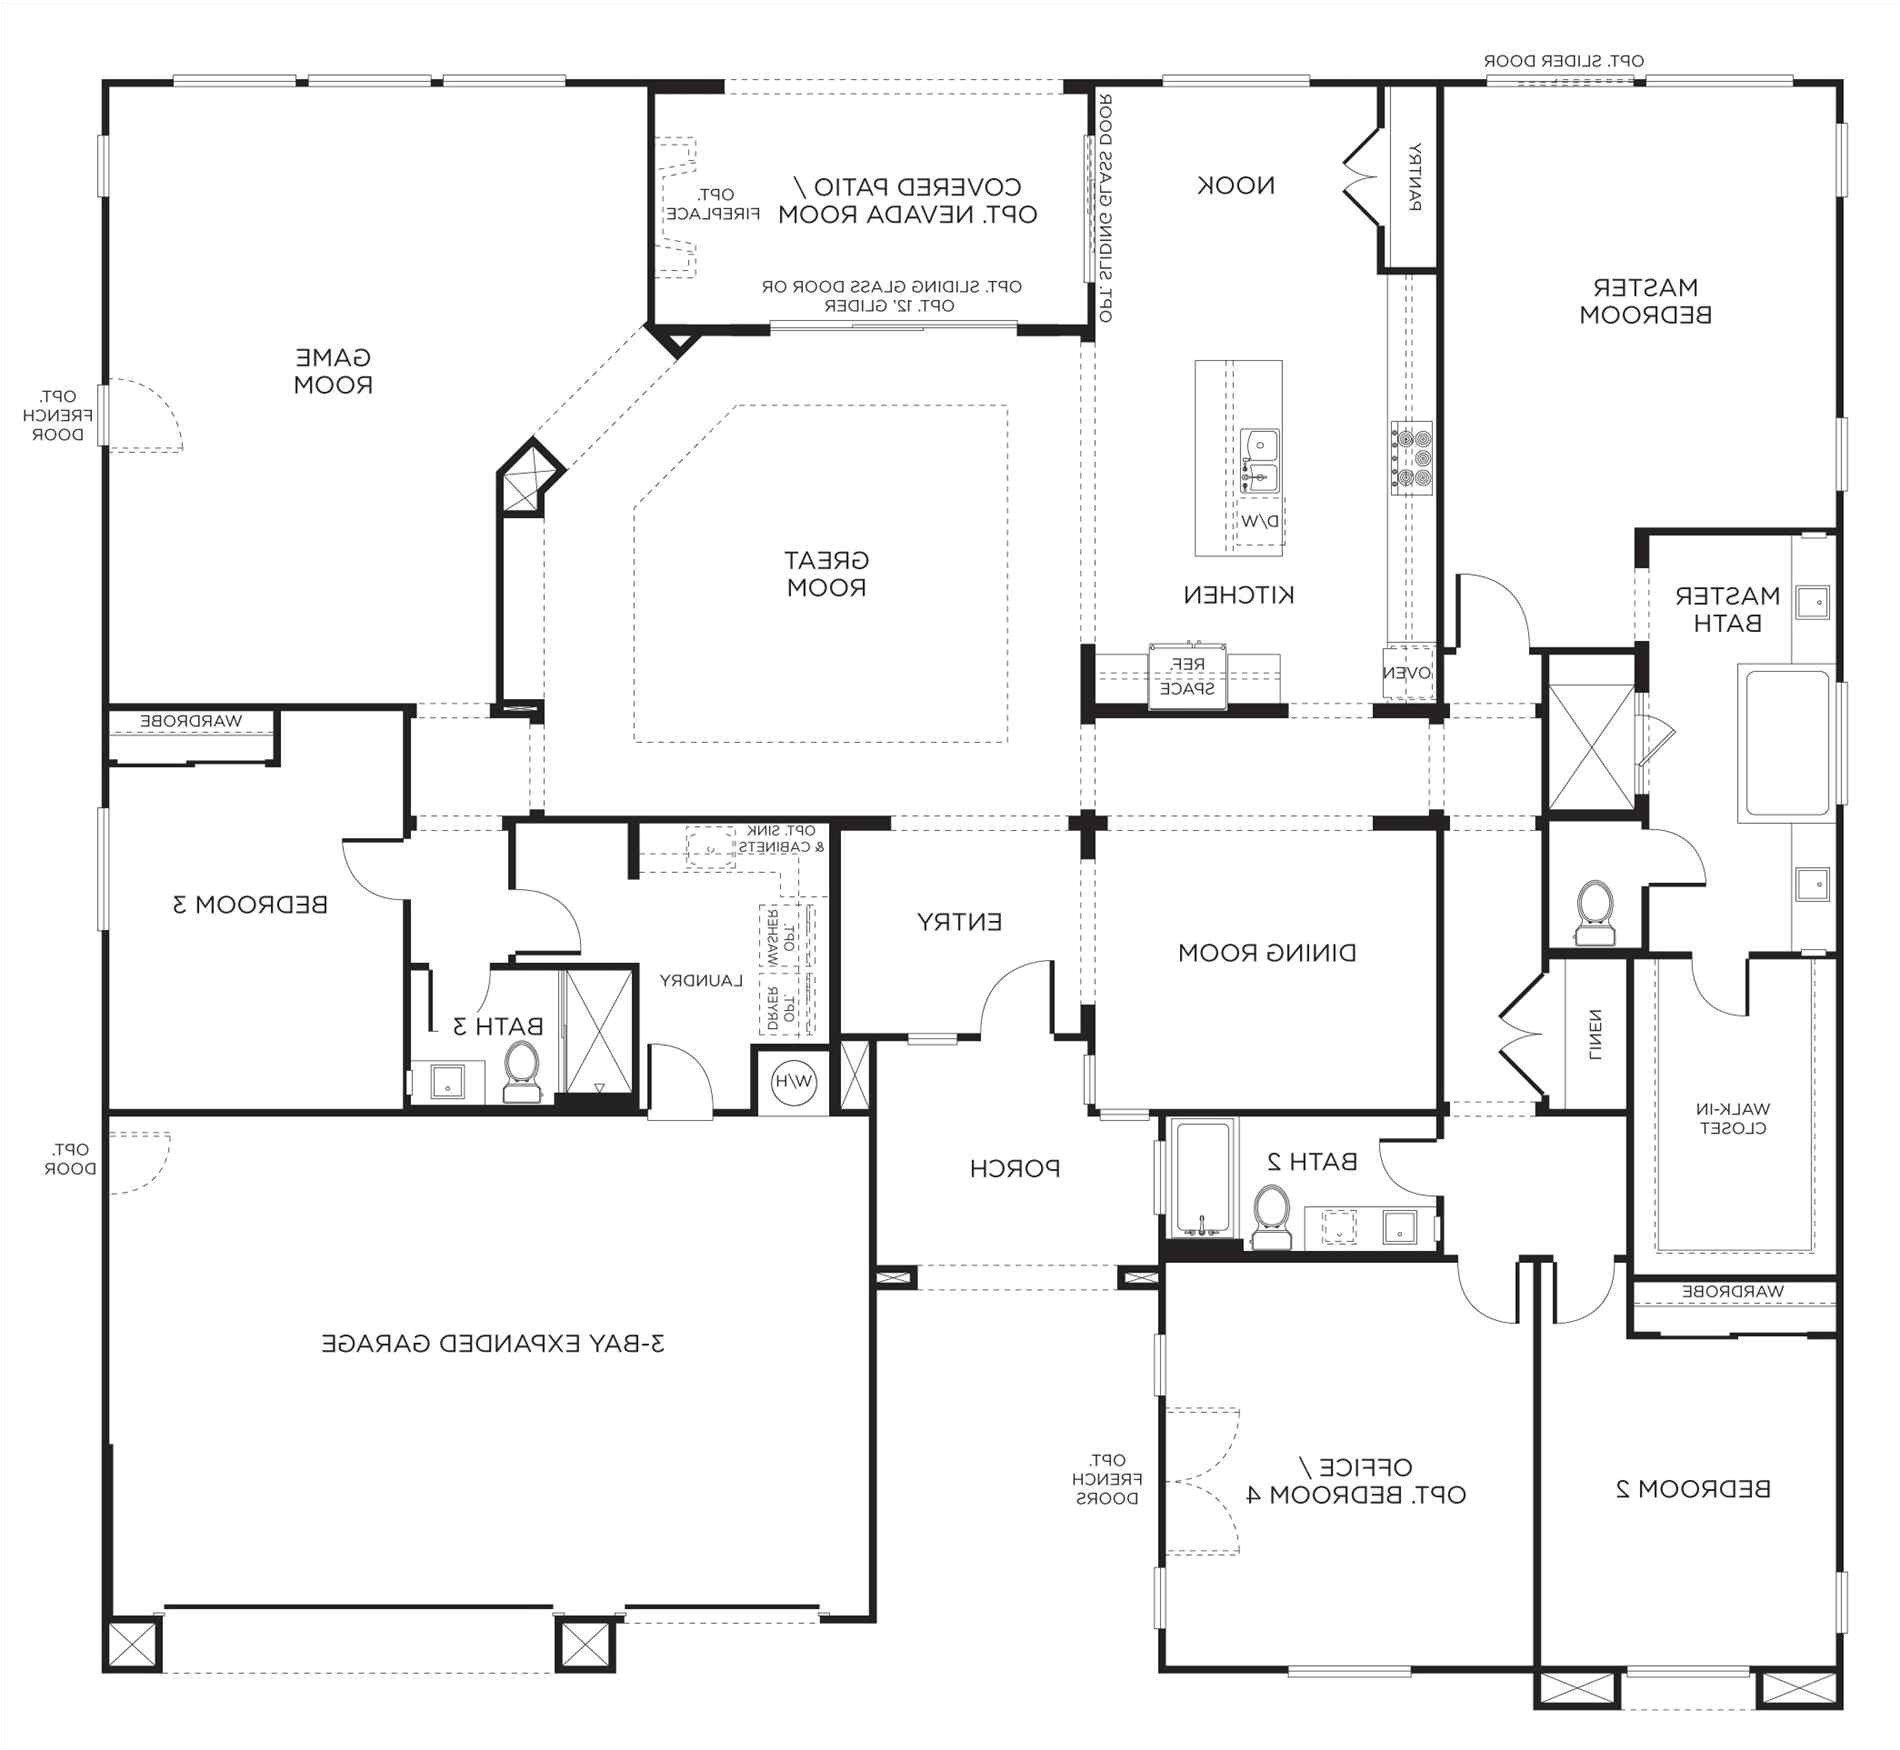 Single Level Home Floor Plans One Single Story Farmhouse Floor Plans Level House with